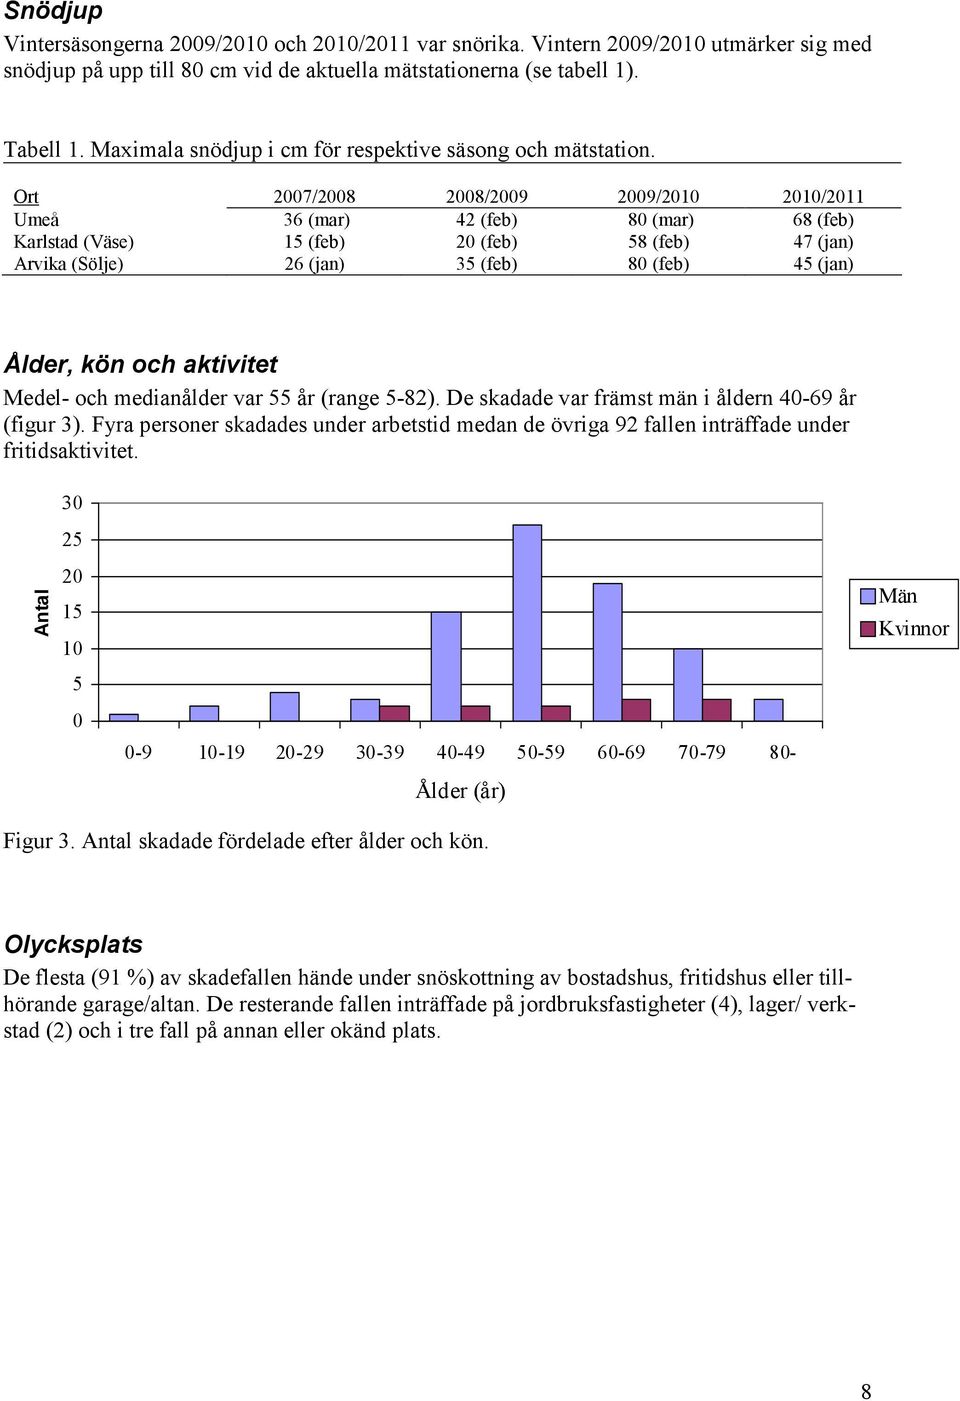 Ort 2007/2008 2008/2009 2009/2010 2010/2011 Umeå 36 (mar) 42 (feb) 80 (mar) 68 (feb) Karlstad (Väse) 15 (feb) 20 (feb) 58 (feb) 47 (jan) Arvika (Sölje) 26 (jan) 35 (feb) 80 (feb) 45 (jan) Ålder, kön